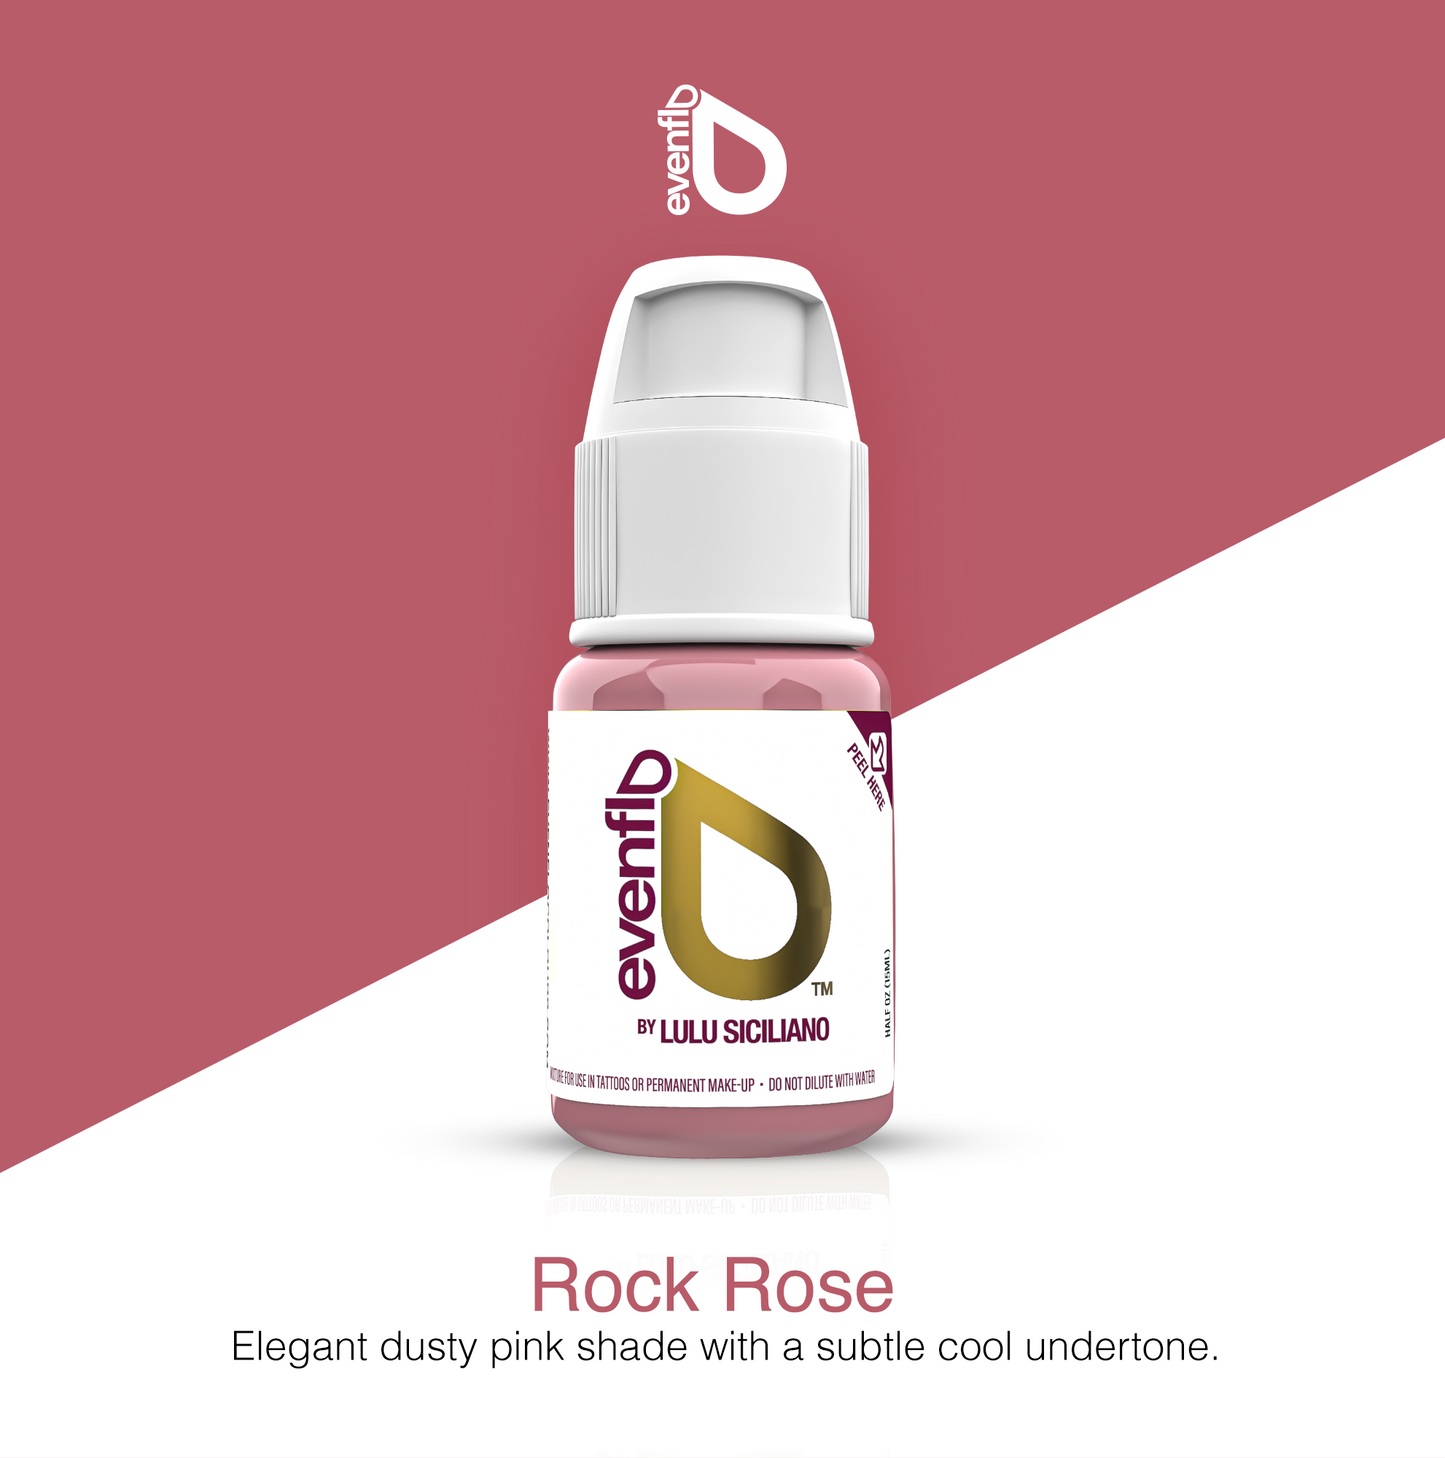 Evenflo Rock Rose